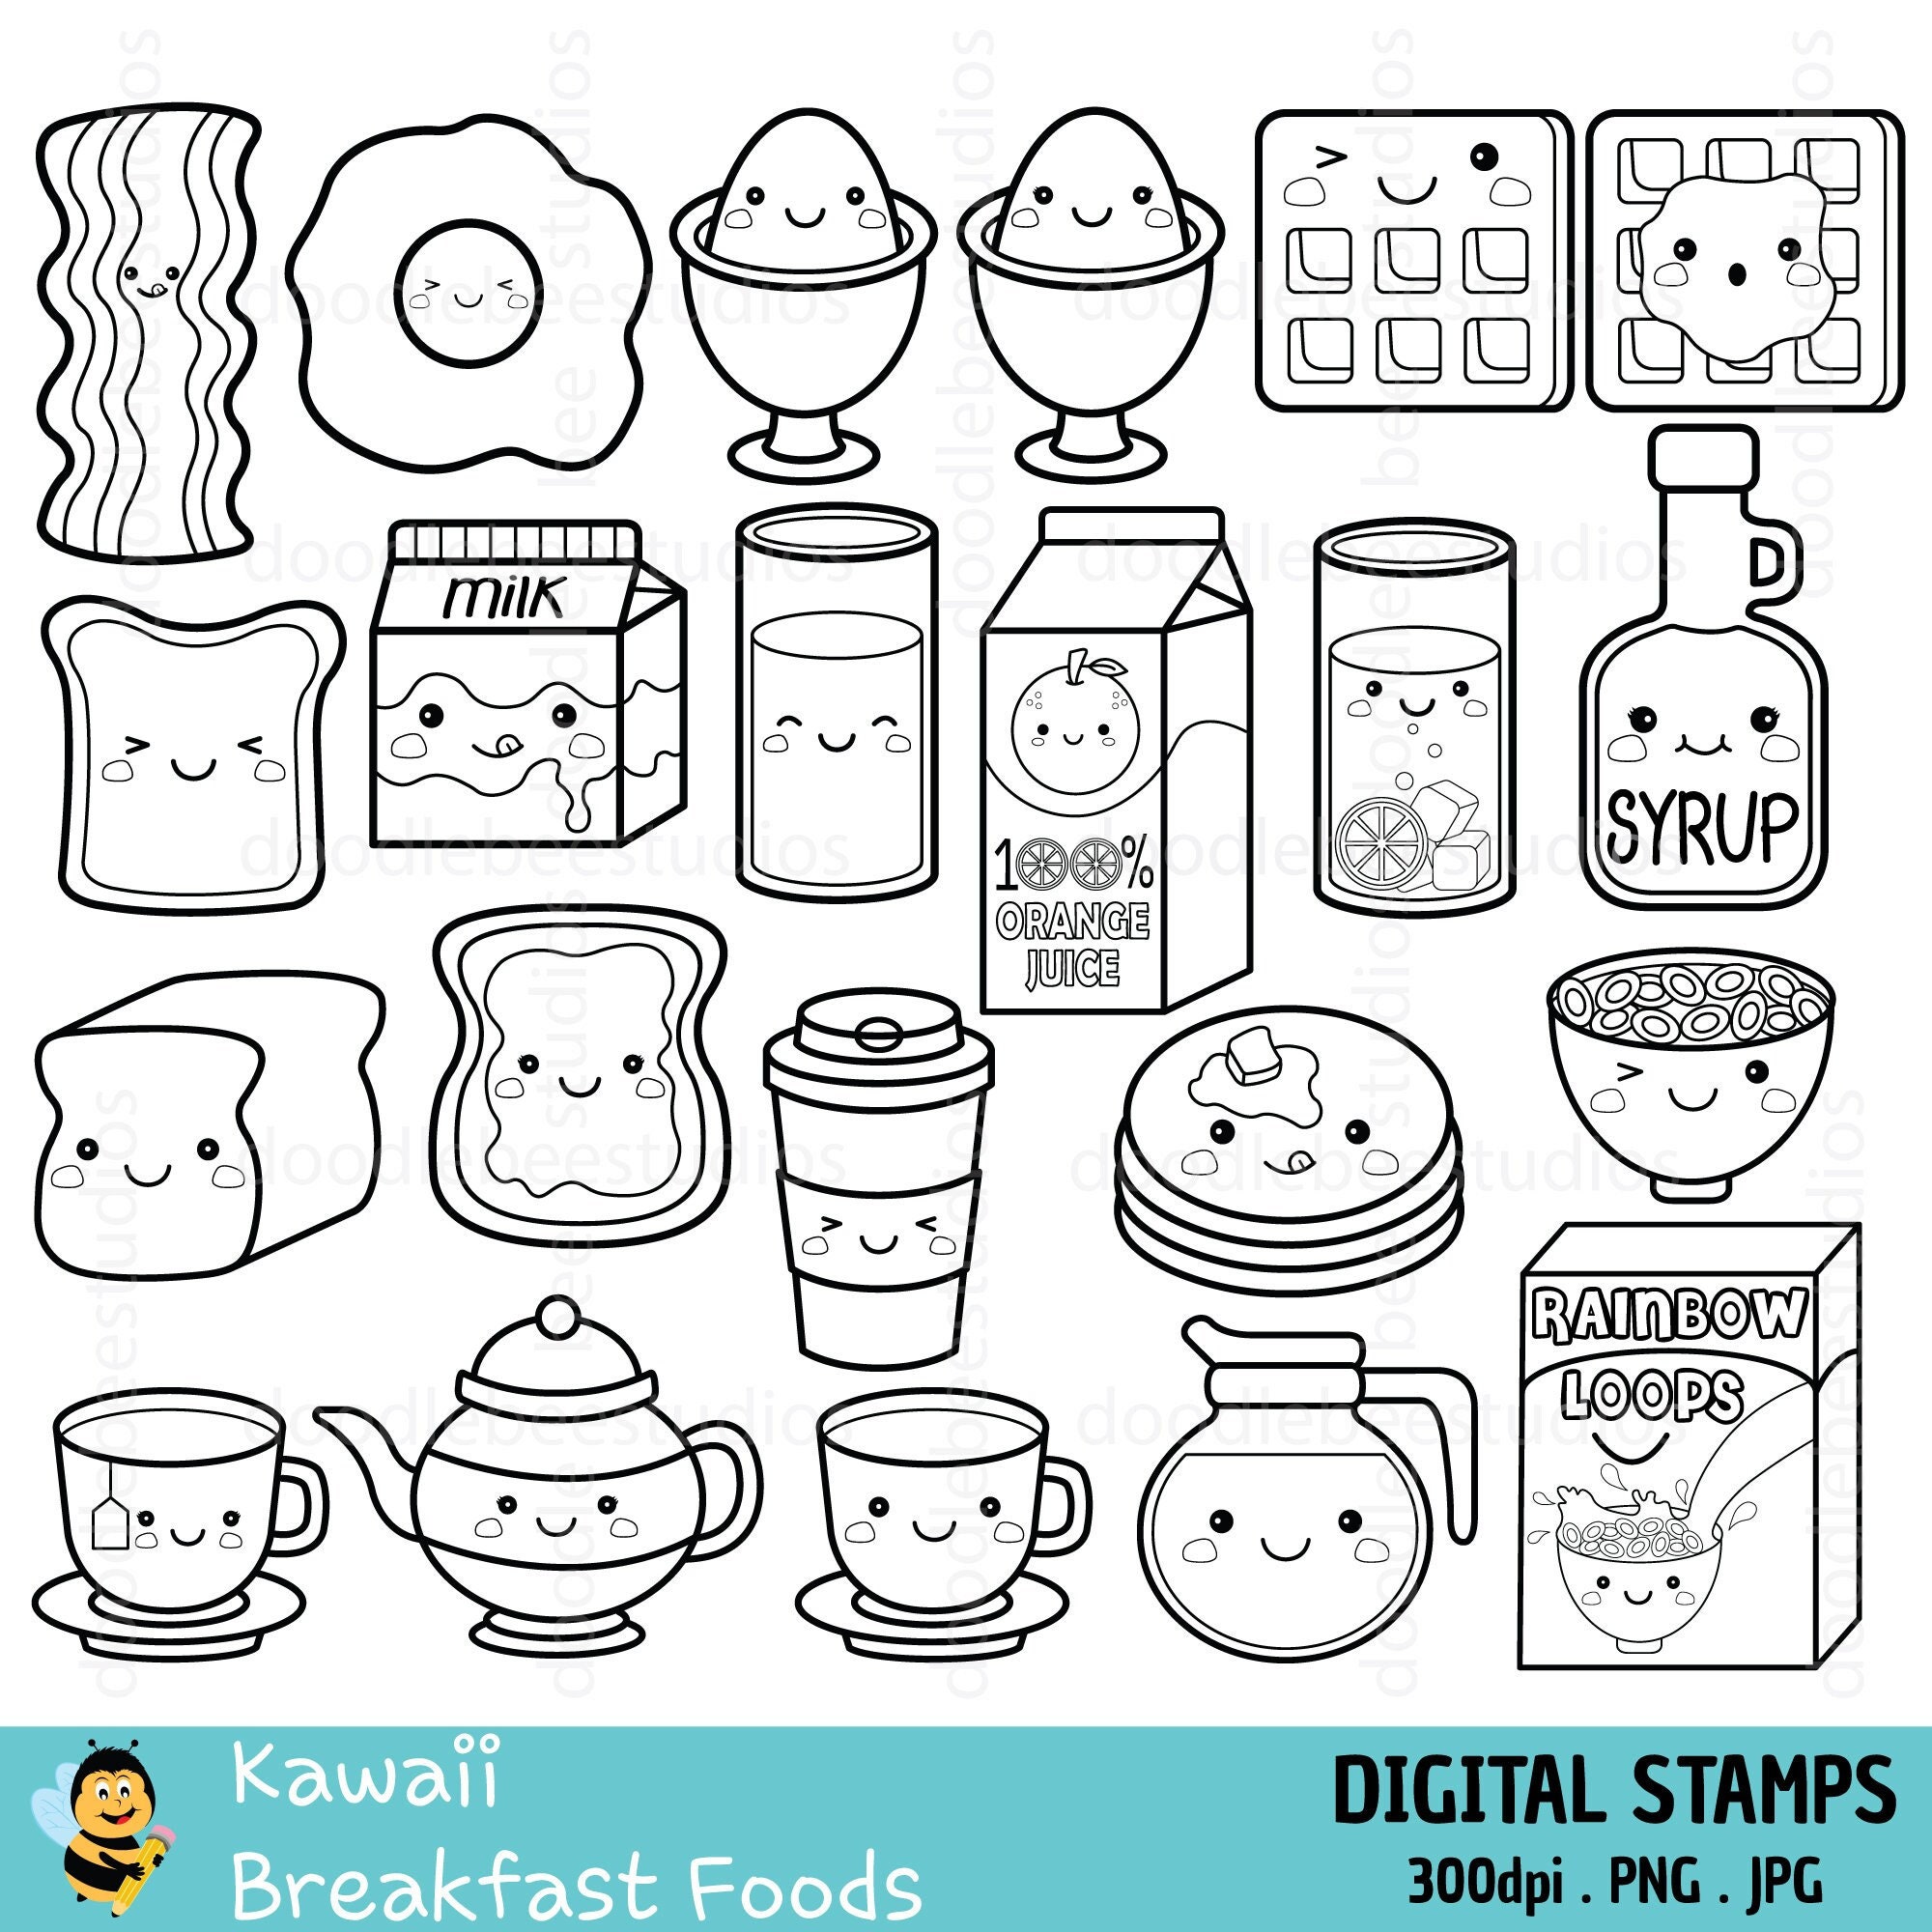 Kawaii Milk – Paper Pastries